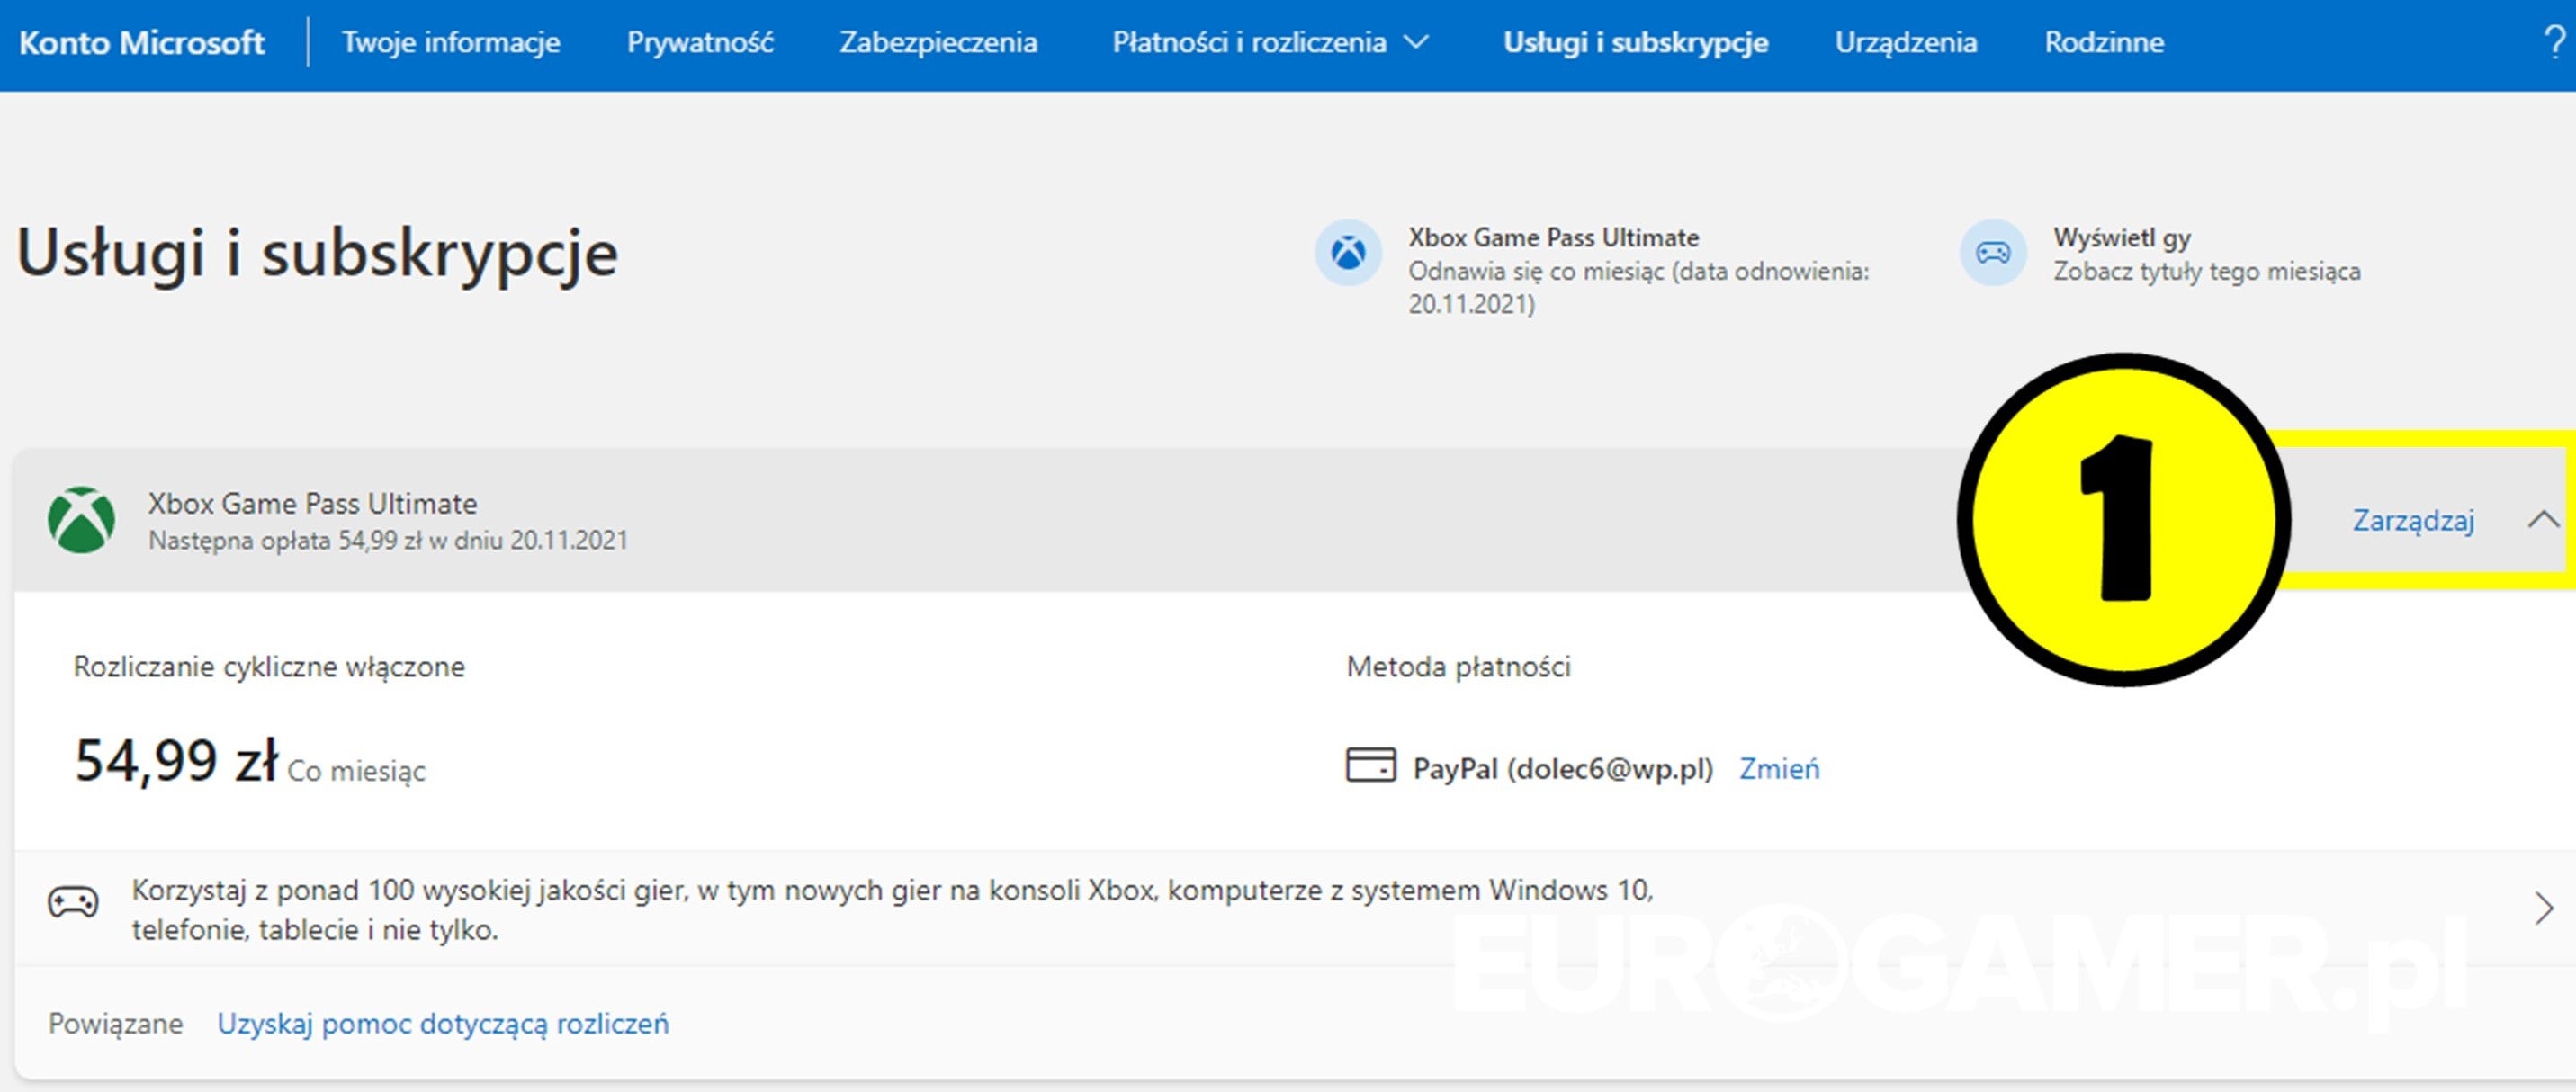 Geometry Pastor Night Xbox Game Pass - jak anulować: rezygnacja | Eurogamer.pl